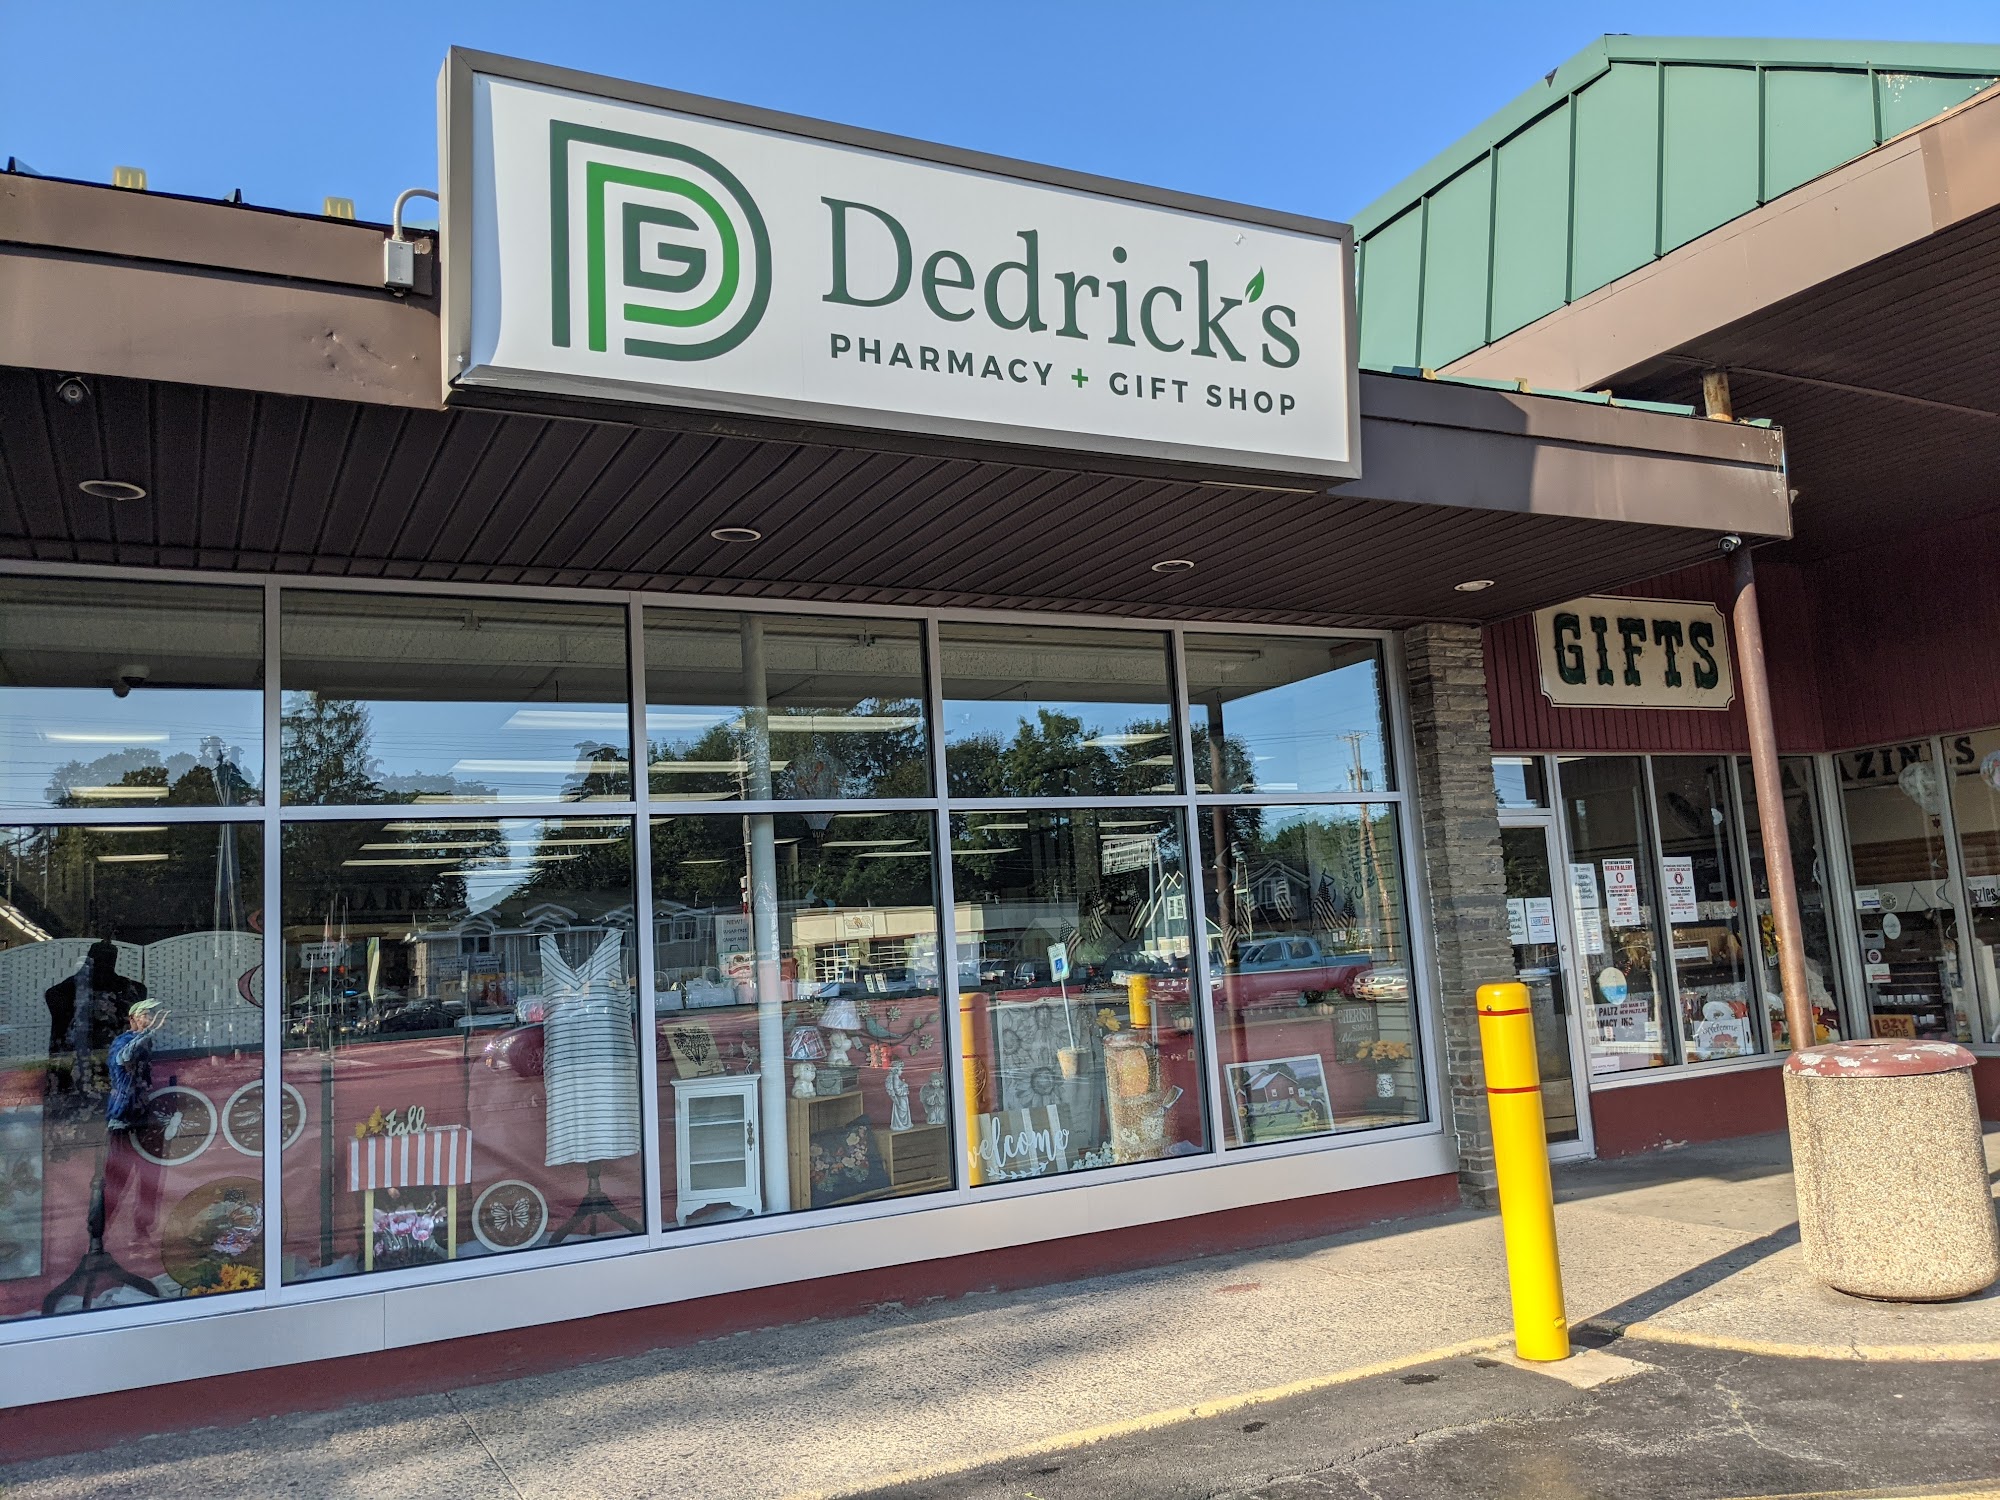 Dedrick's Pharmacy and Gift Shop